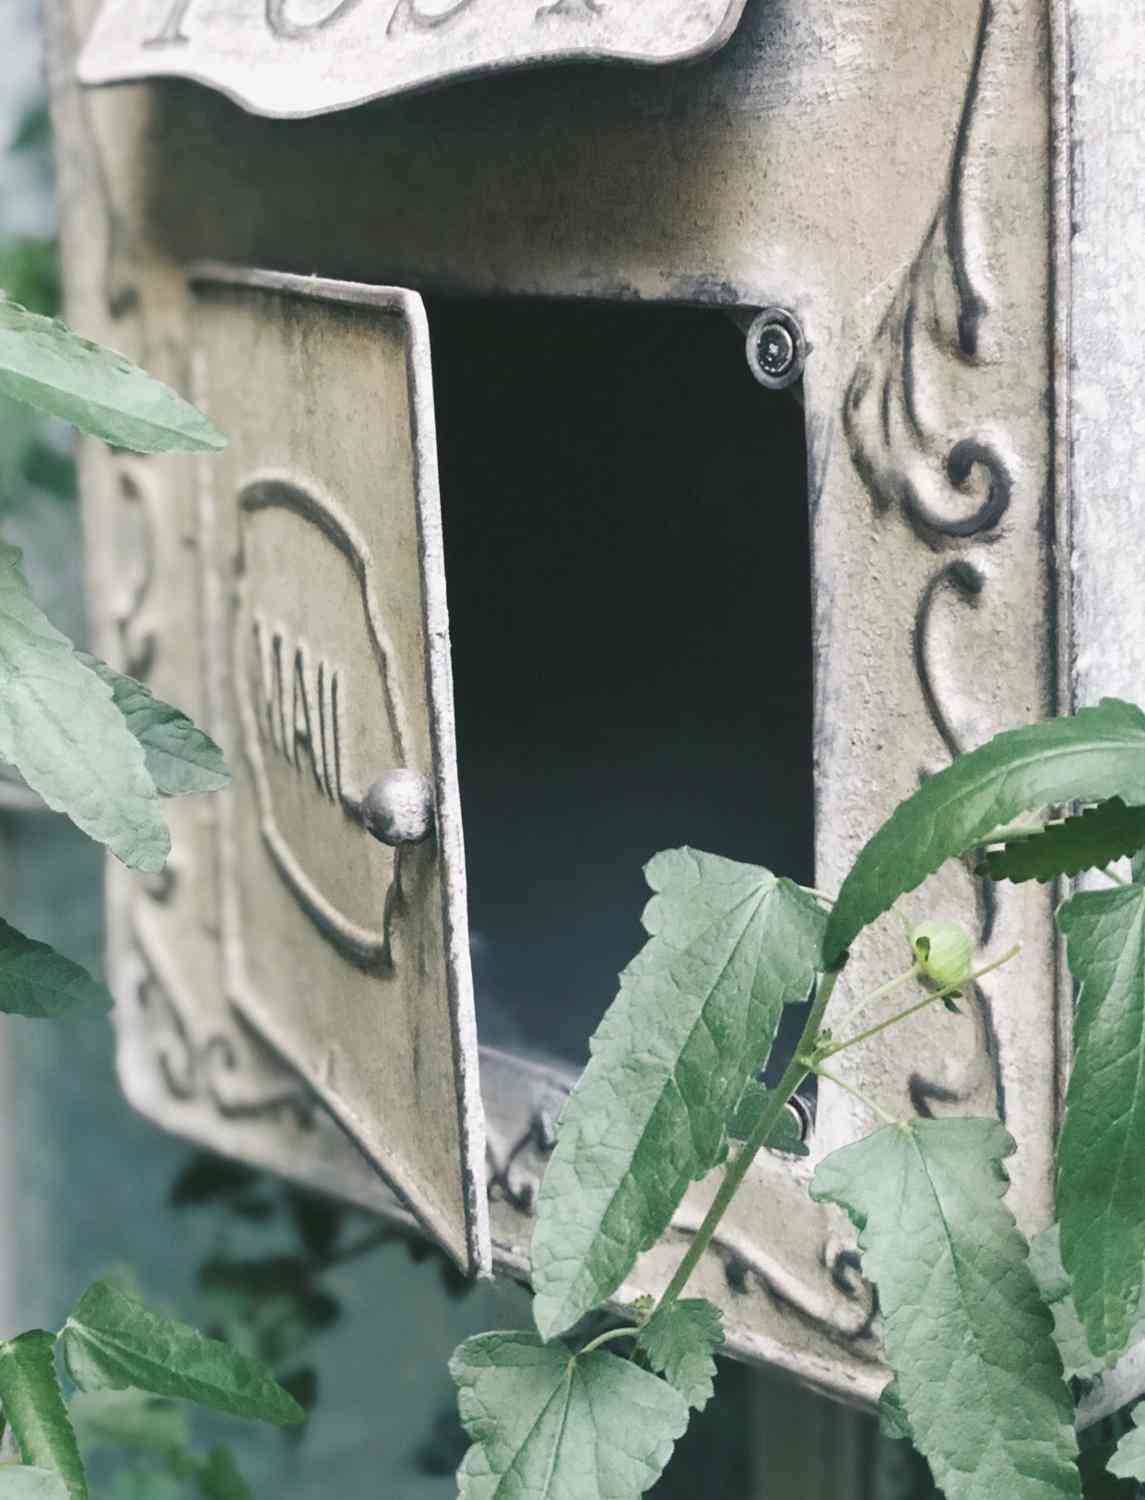 Garden Decor Handcrafted Metal Retro Mailbox